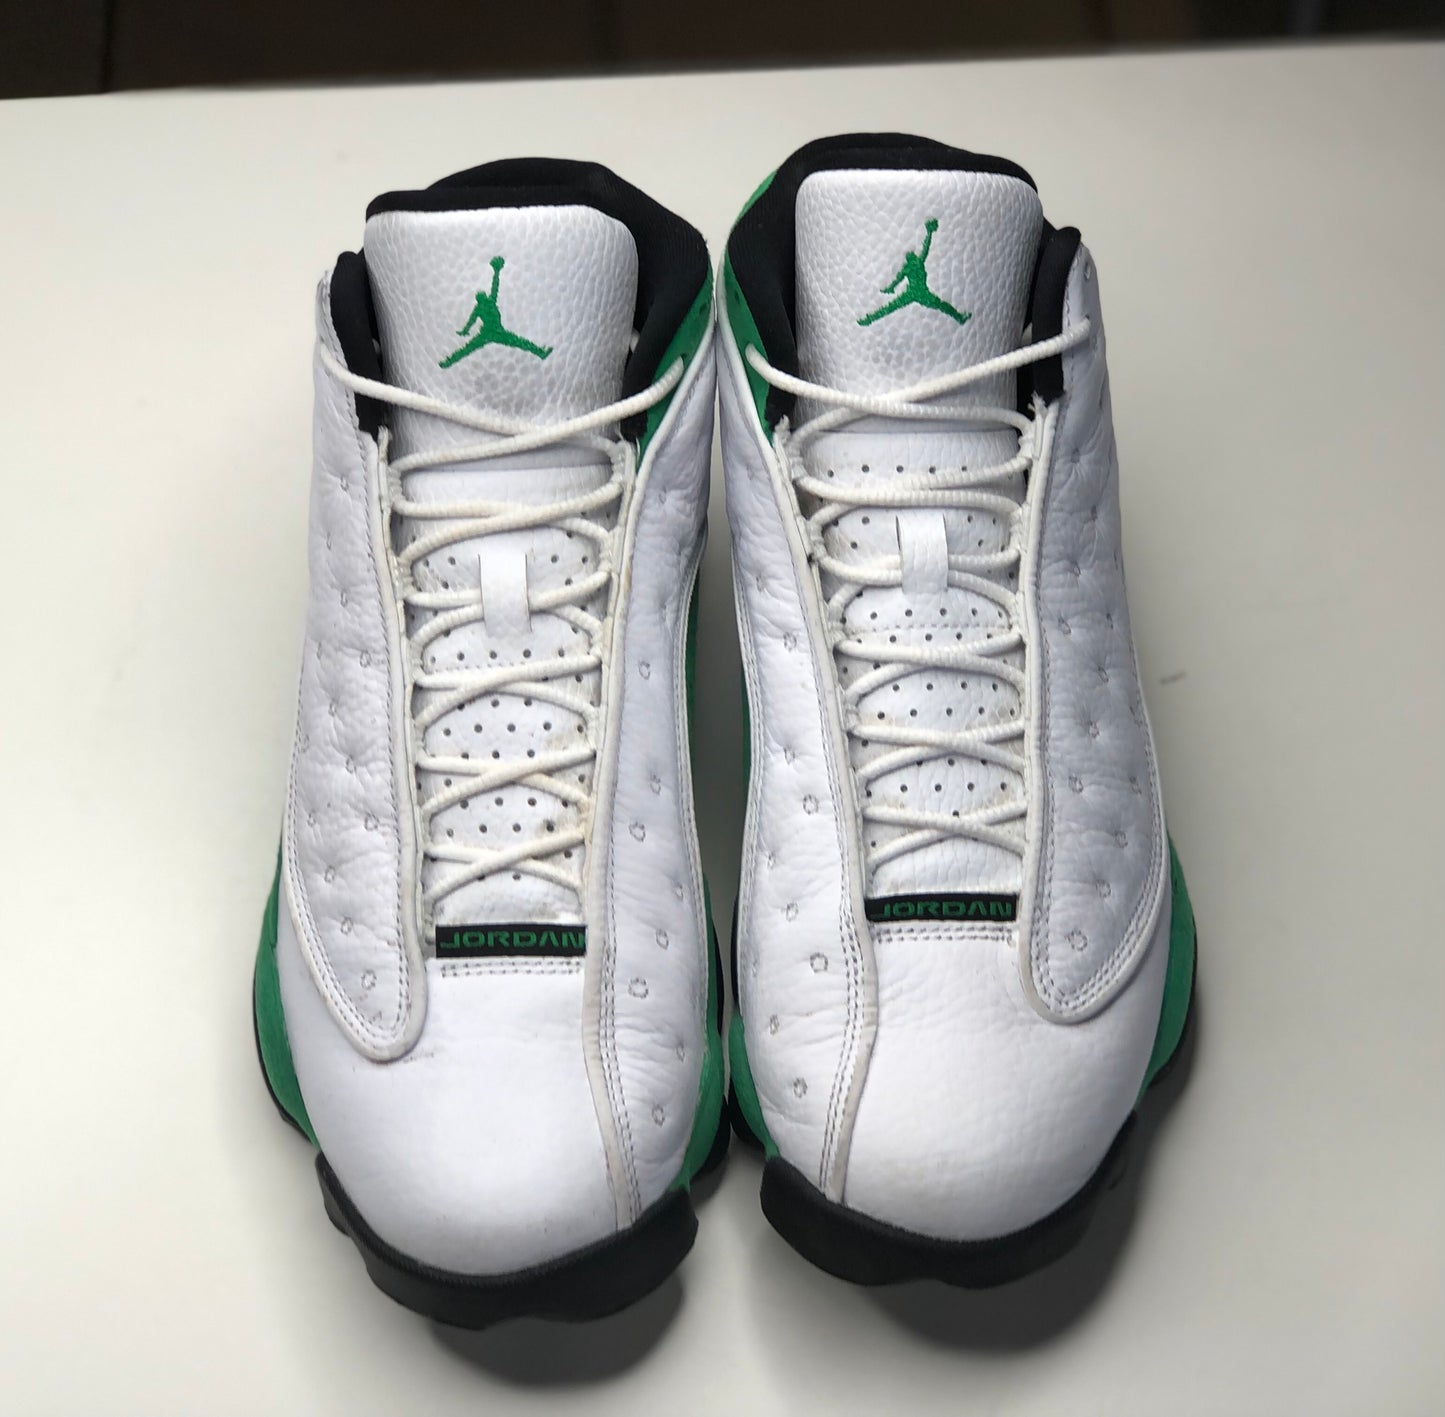 Jordan 13 White Lucky Green size 8